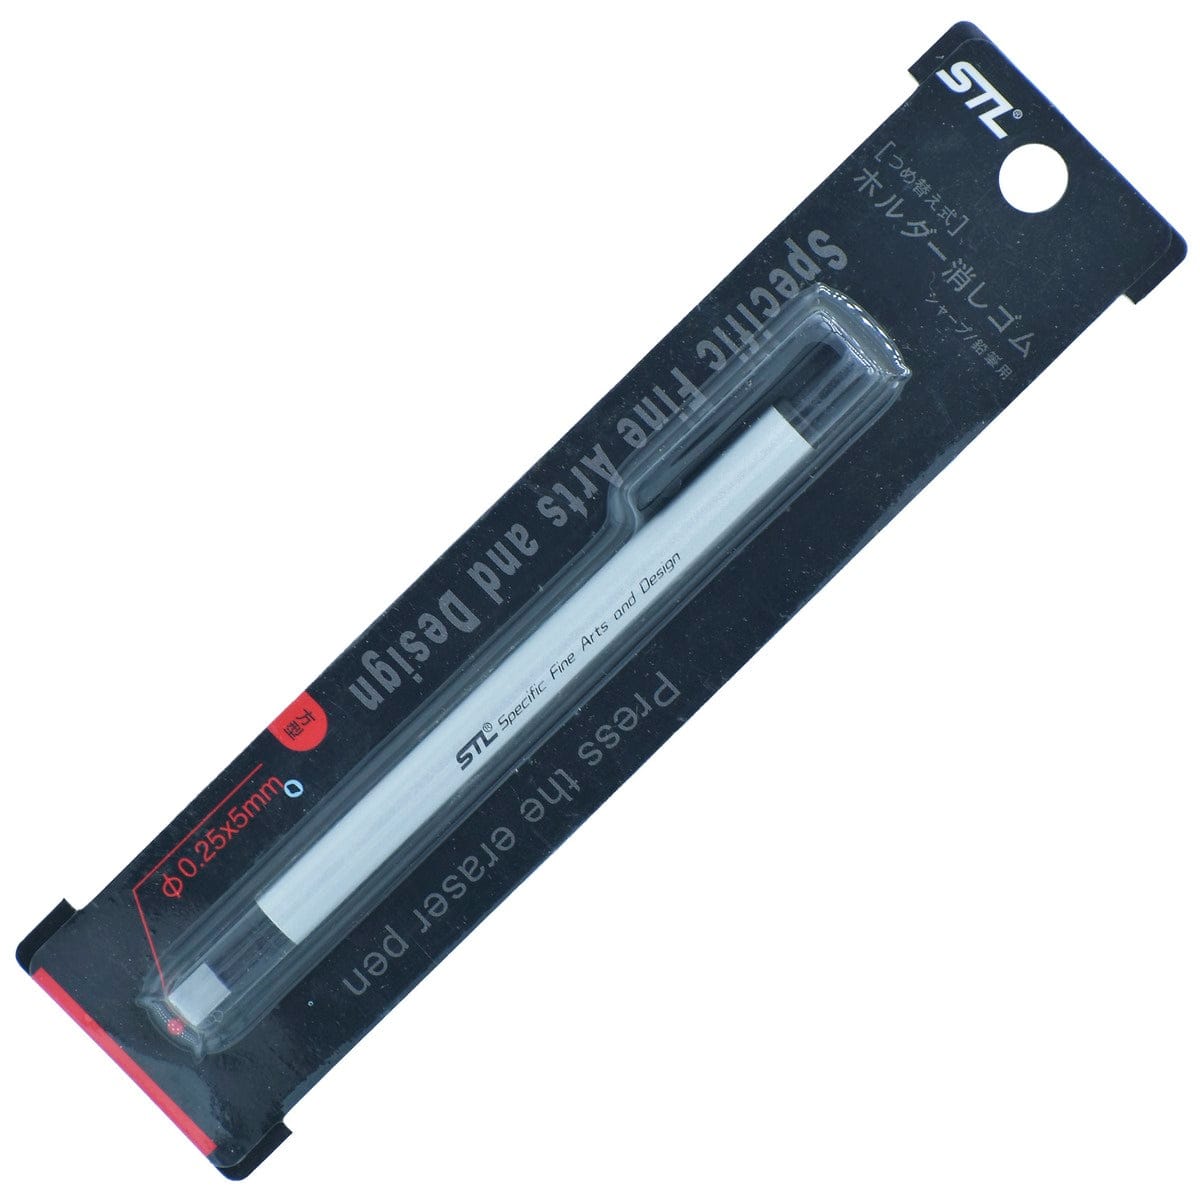 jags-mumbai Marker Pens And More Erase Pen 0.25x5mm ST-0025